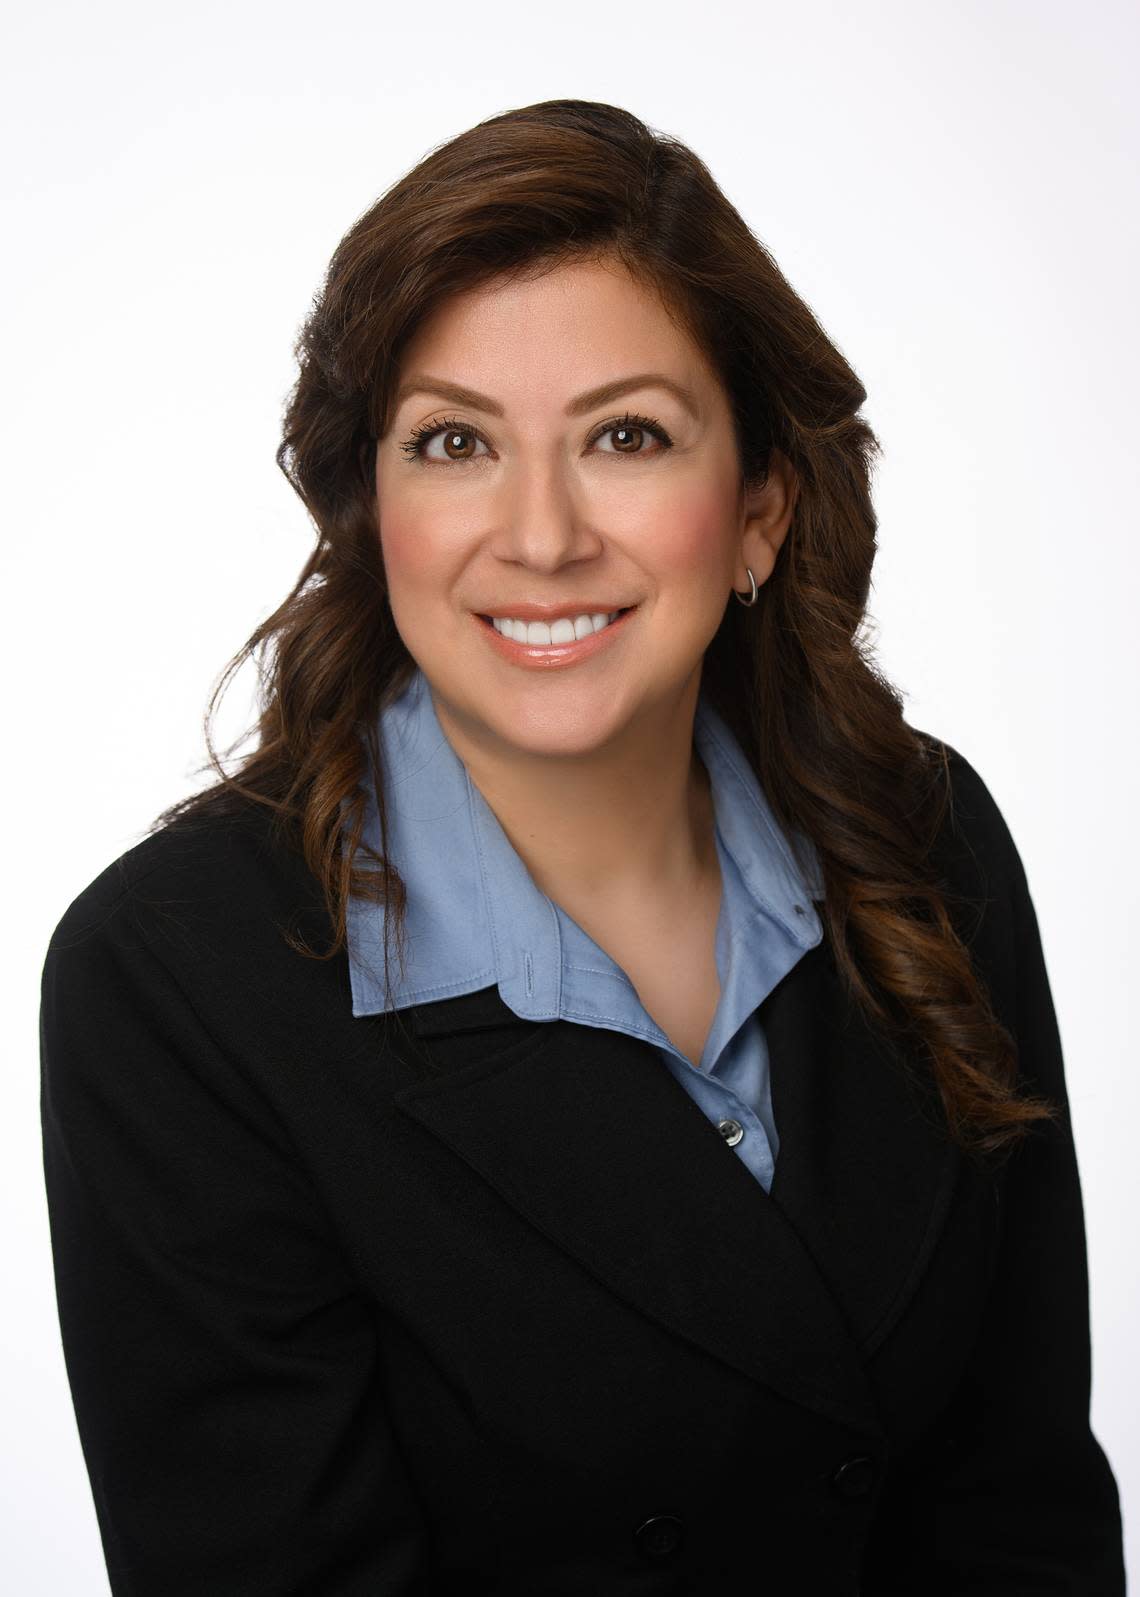 Brenda Monarrez Provided by candidate